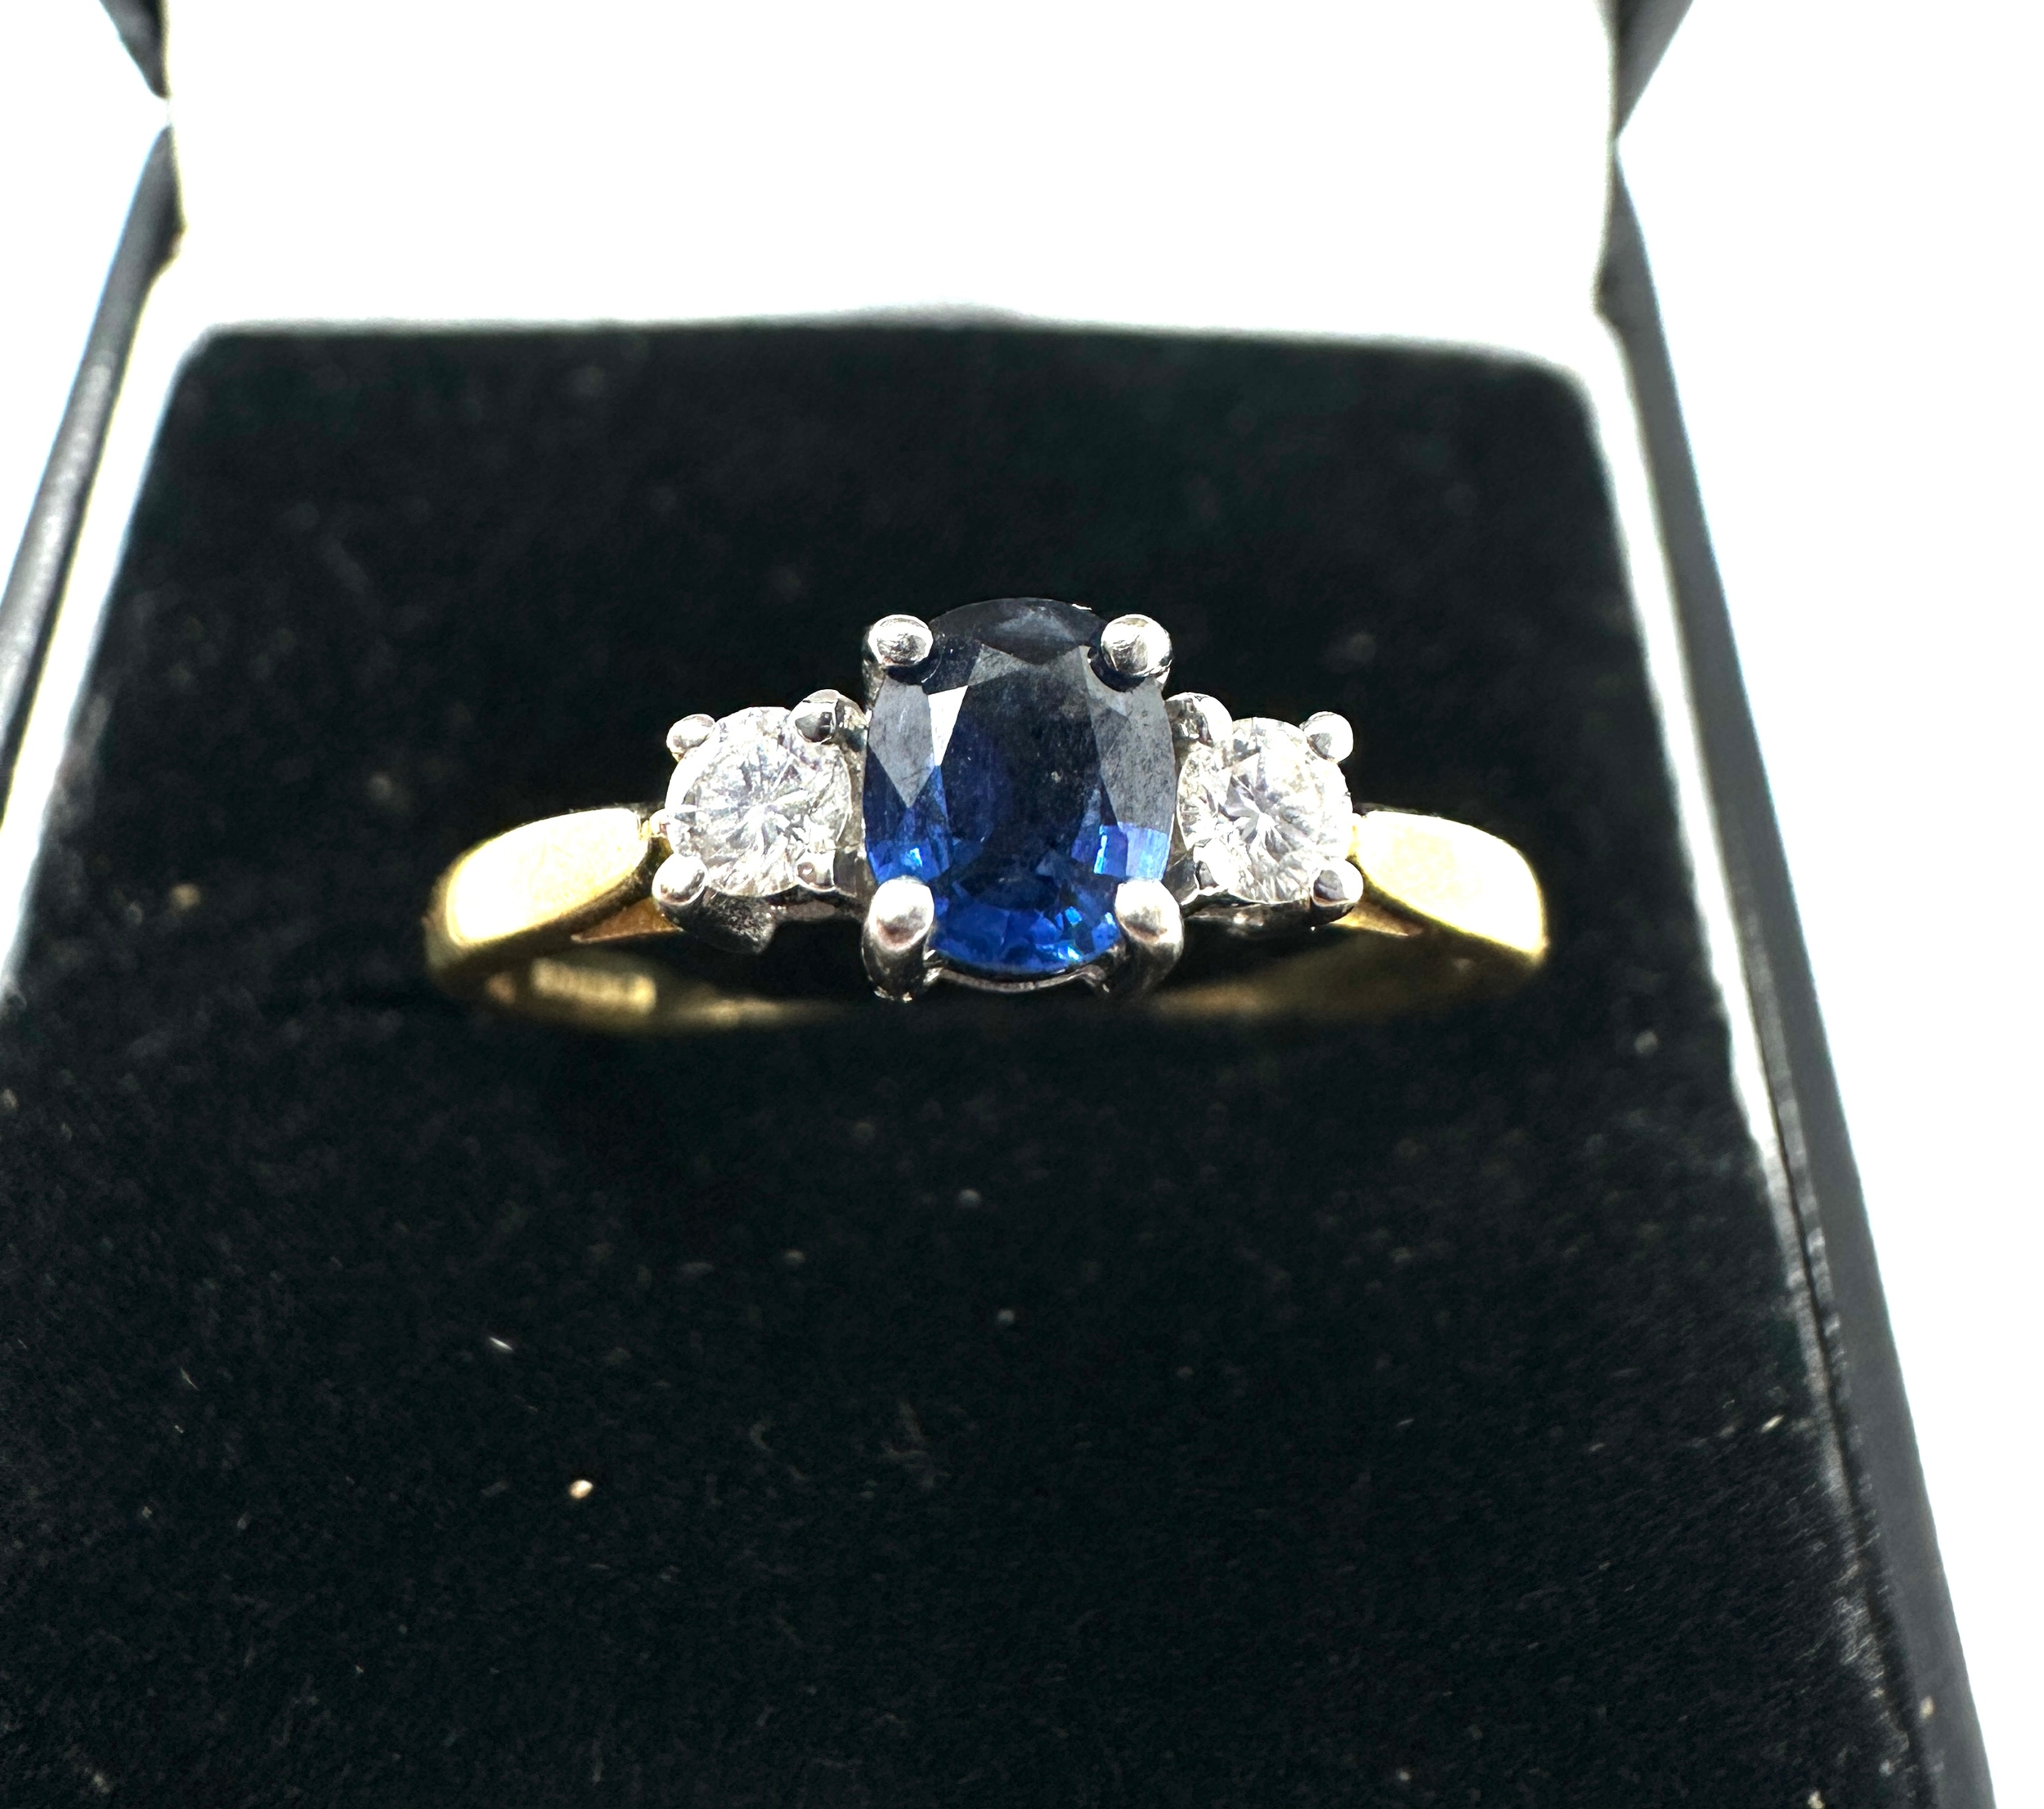 18ct gold diamond & sapphire ring weight 2.7g